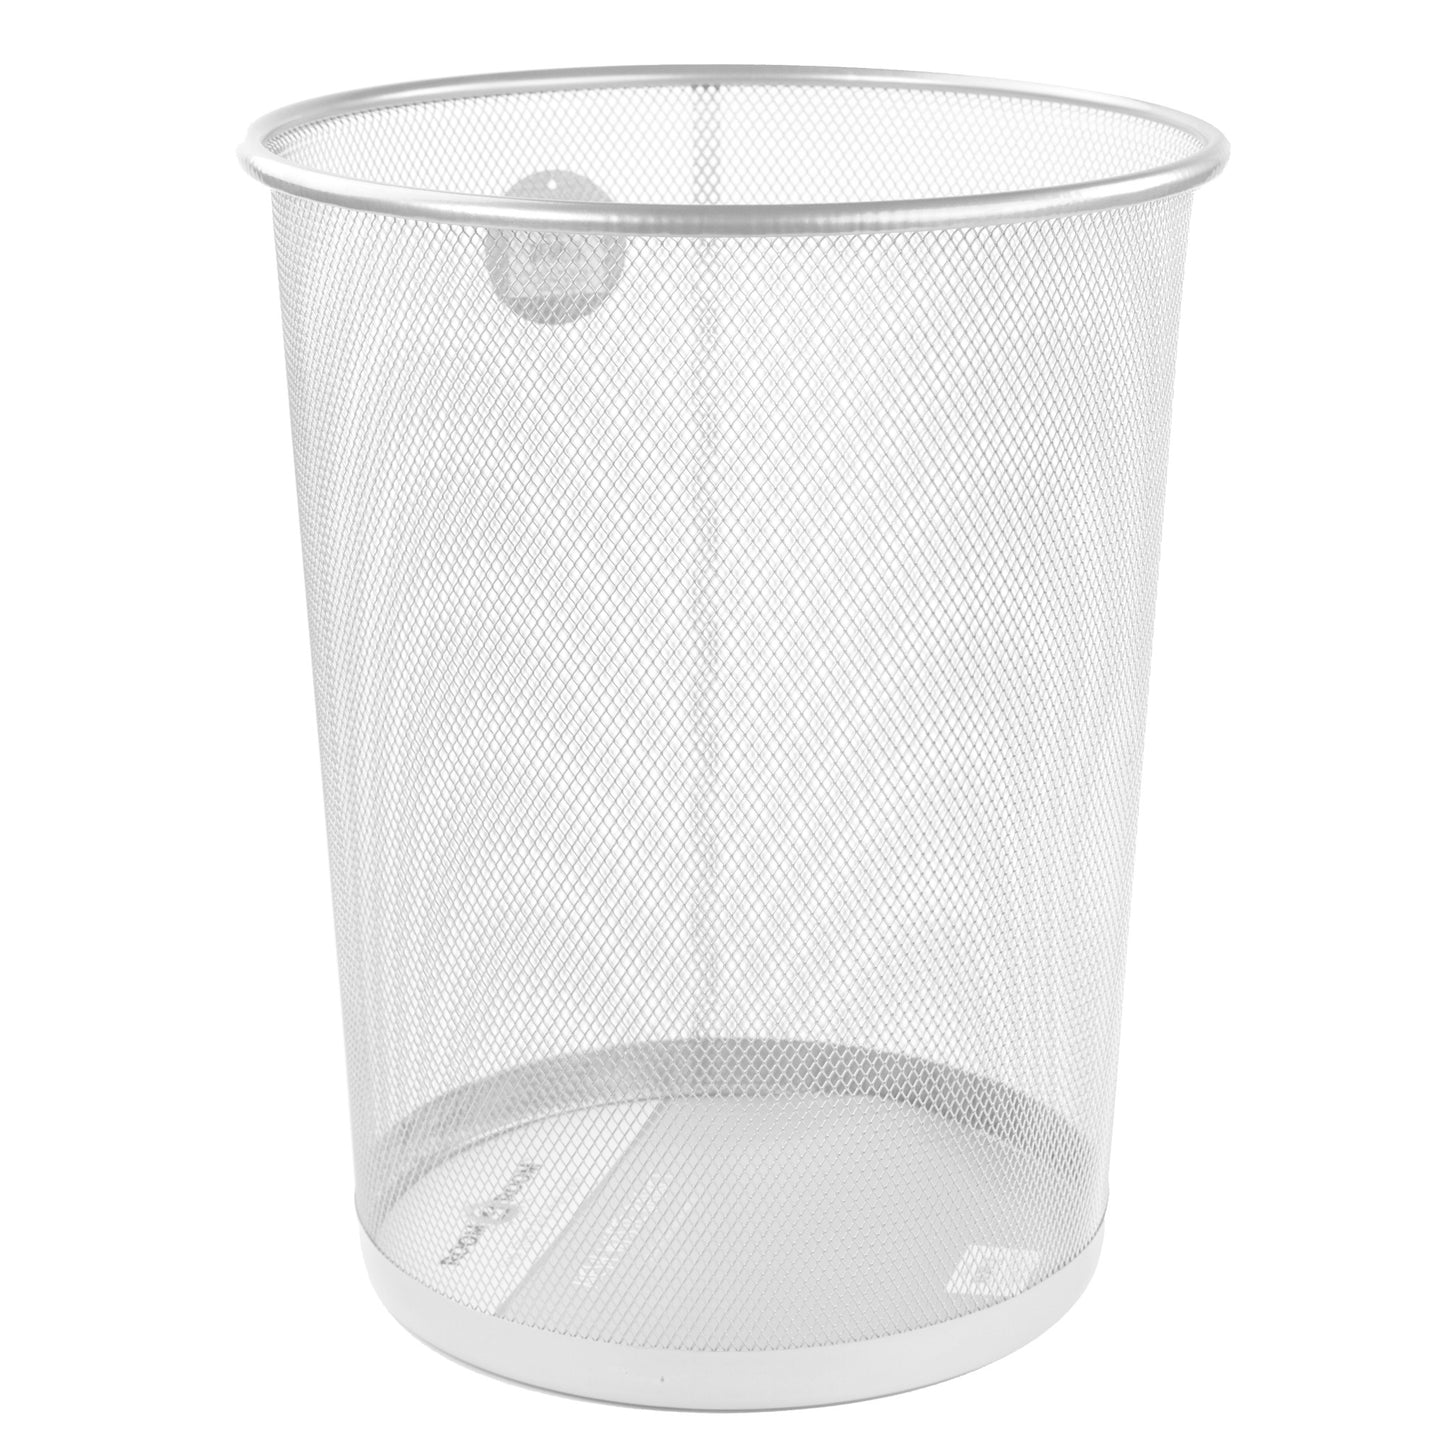 Home Basics Mesh Steel Waste Basket, White - White